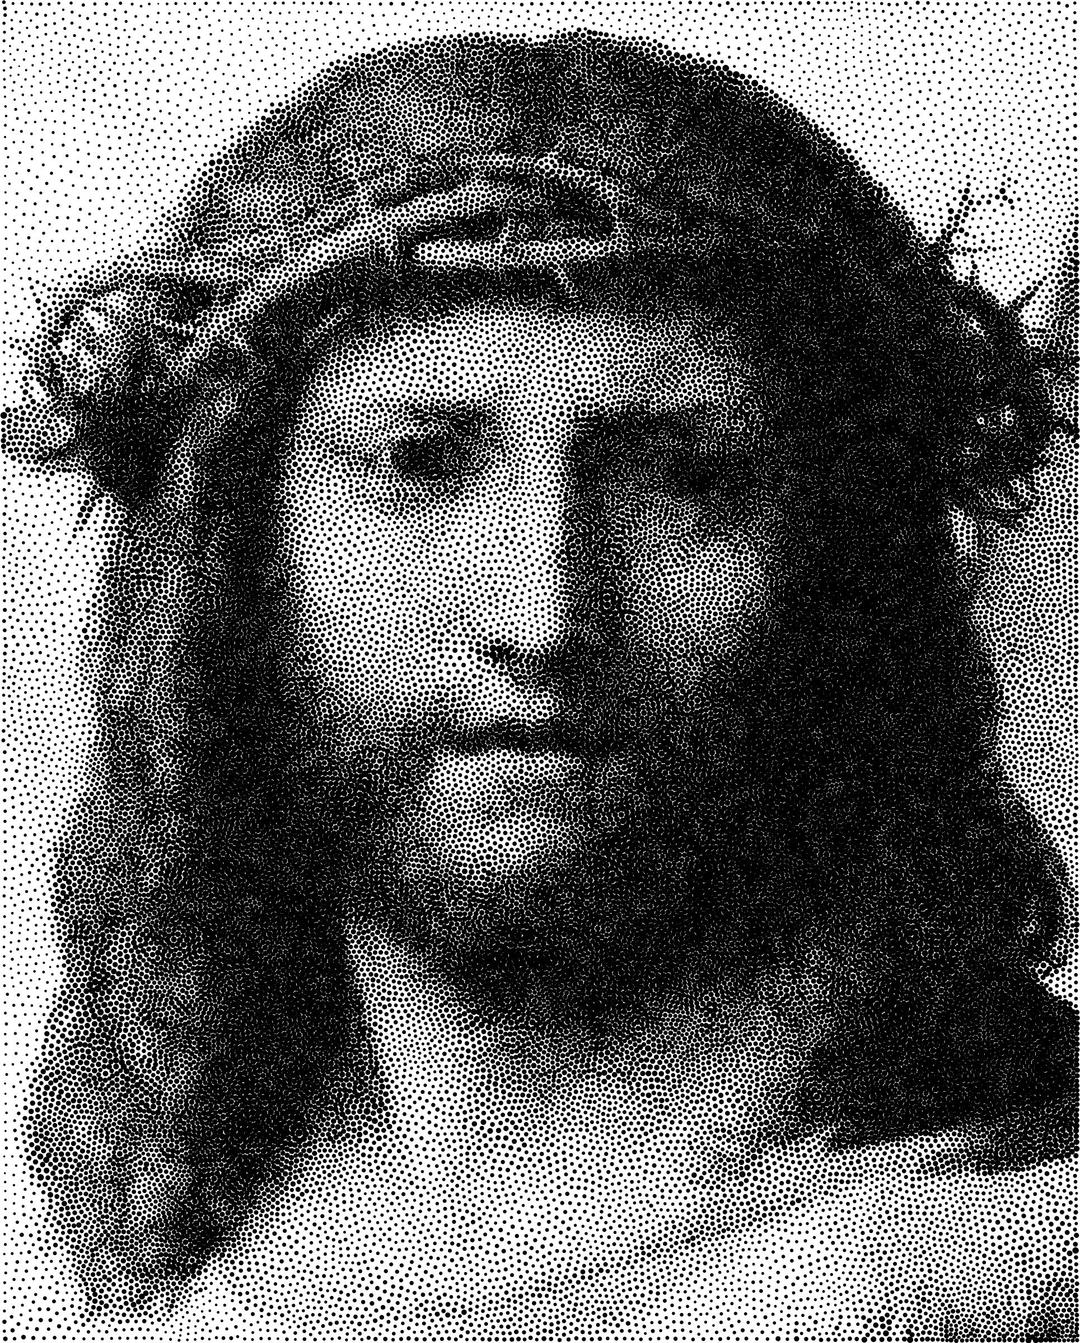 Antonio Allegri's Head Of Christ Stippled png transparent